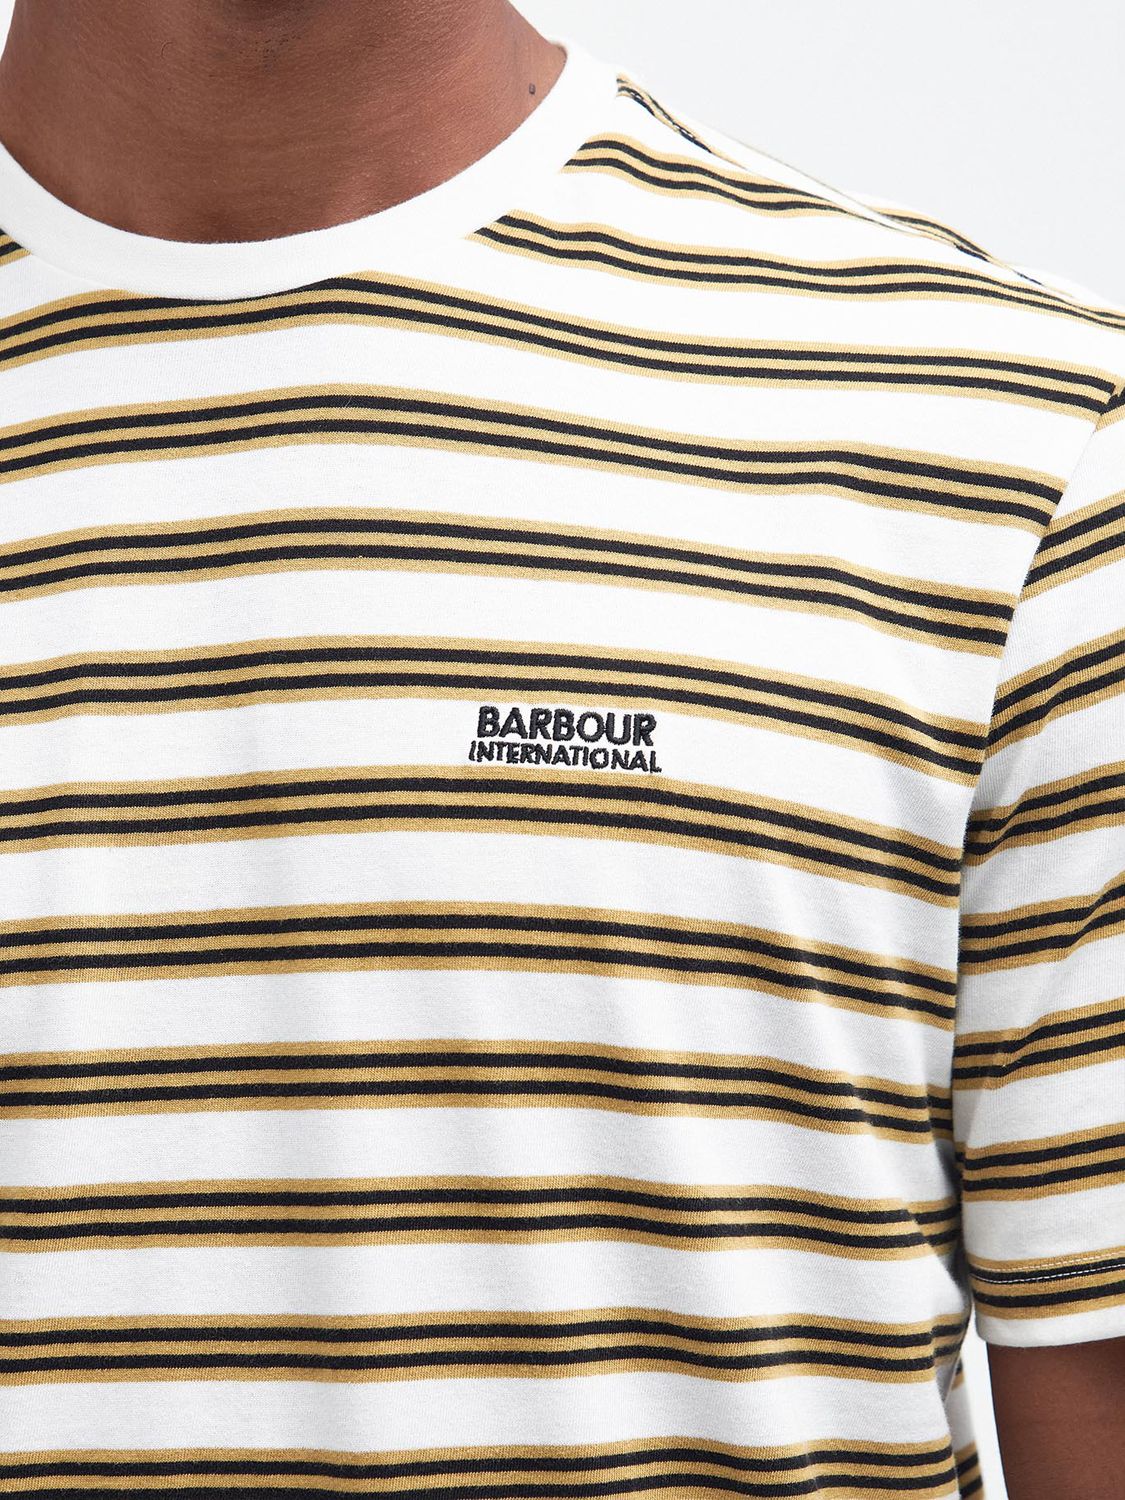 Barbour International Cage T-Shirt, White/Multi, L